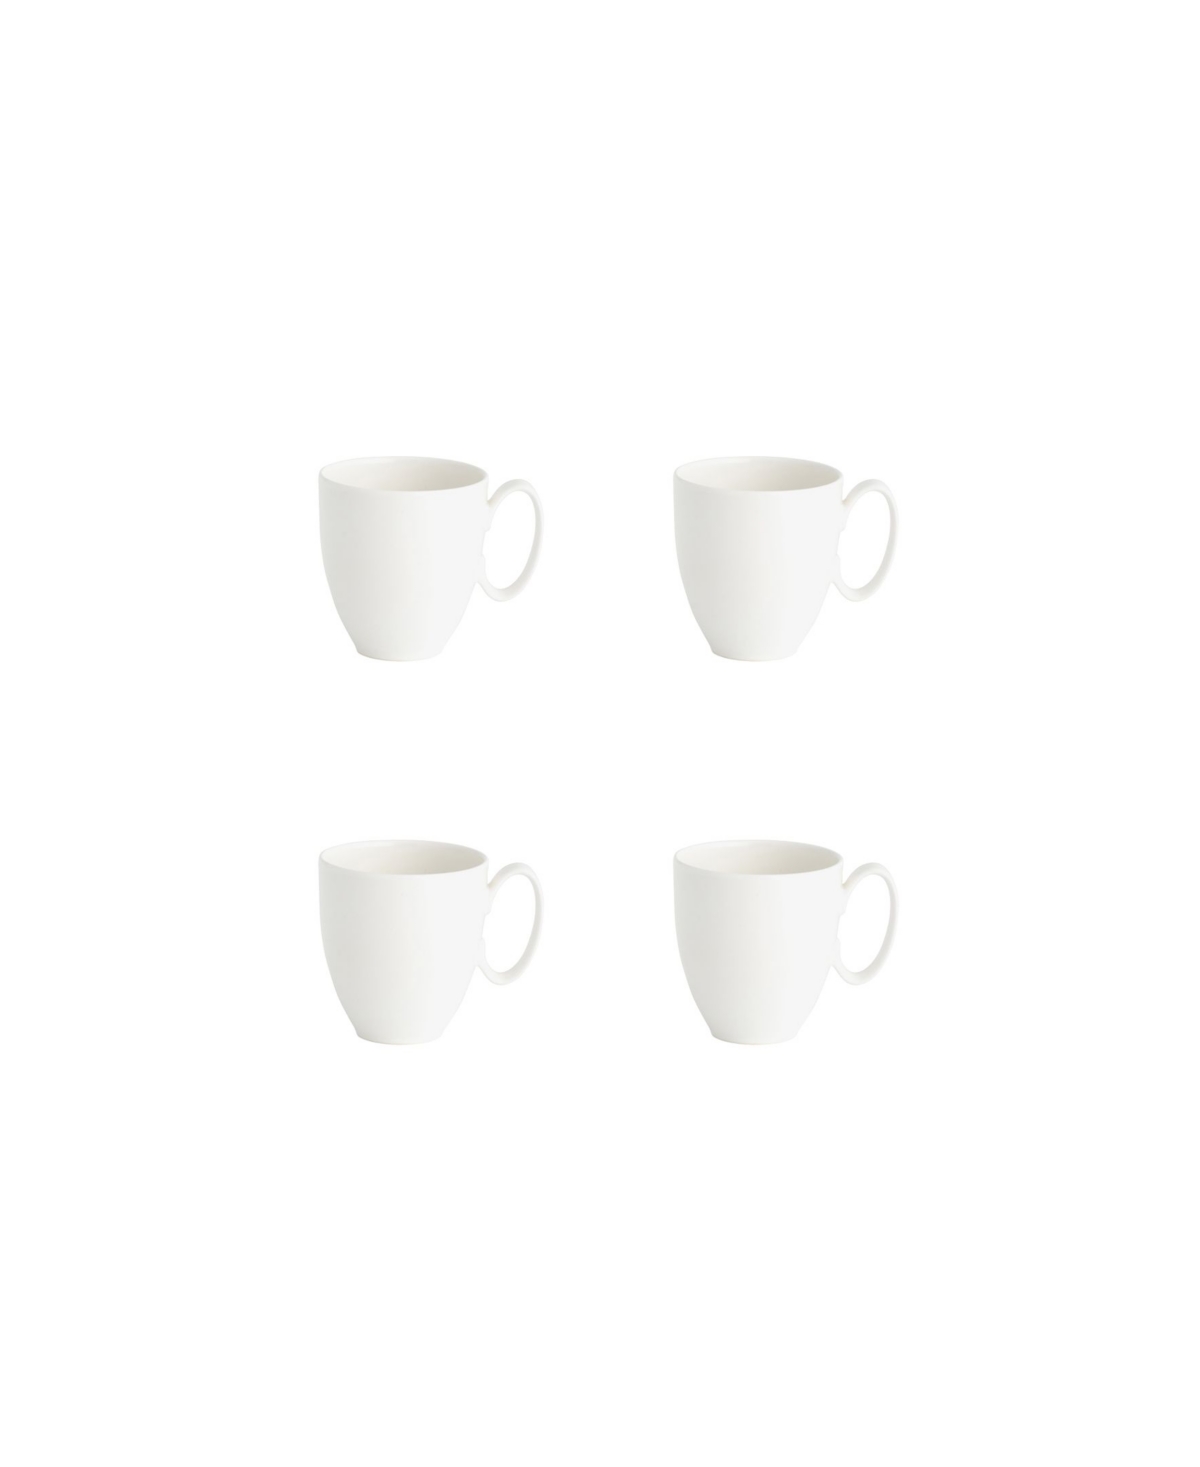 Portables 4 Piece Mugs, Service for 4 - White